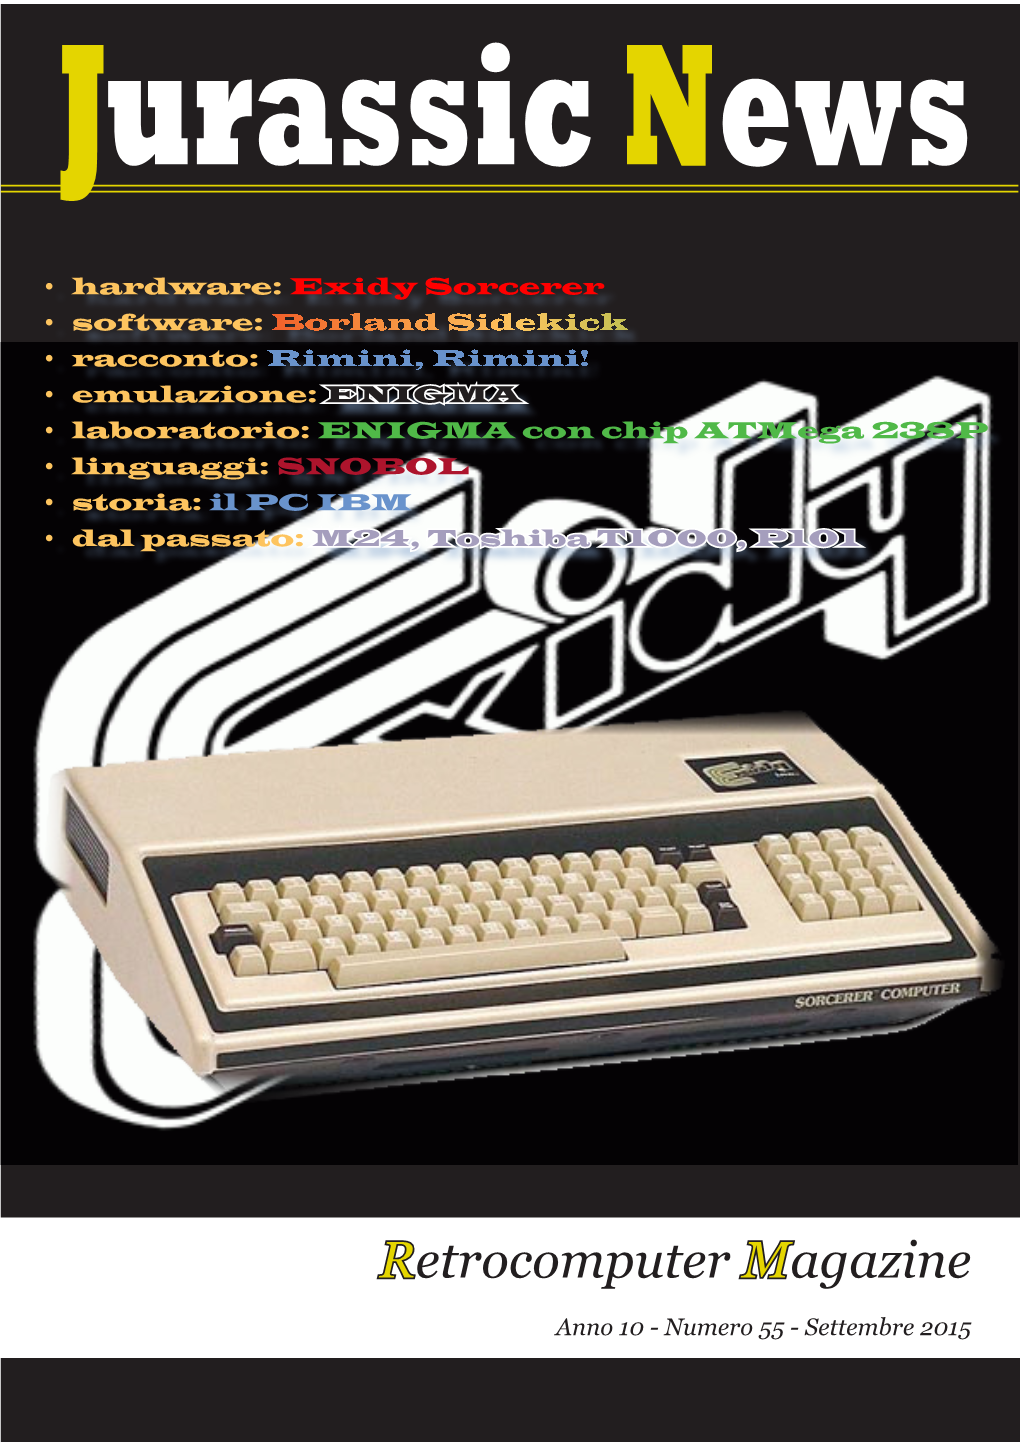 Retrocomputer Magazine